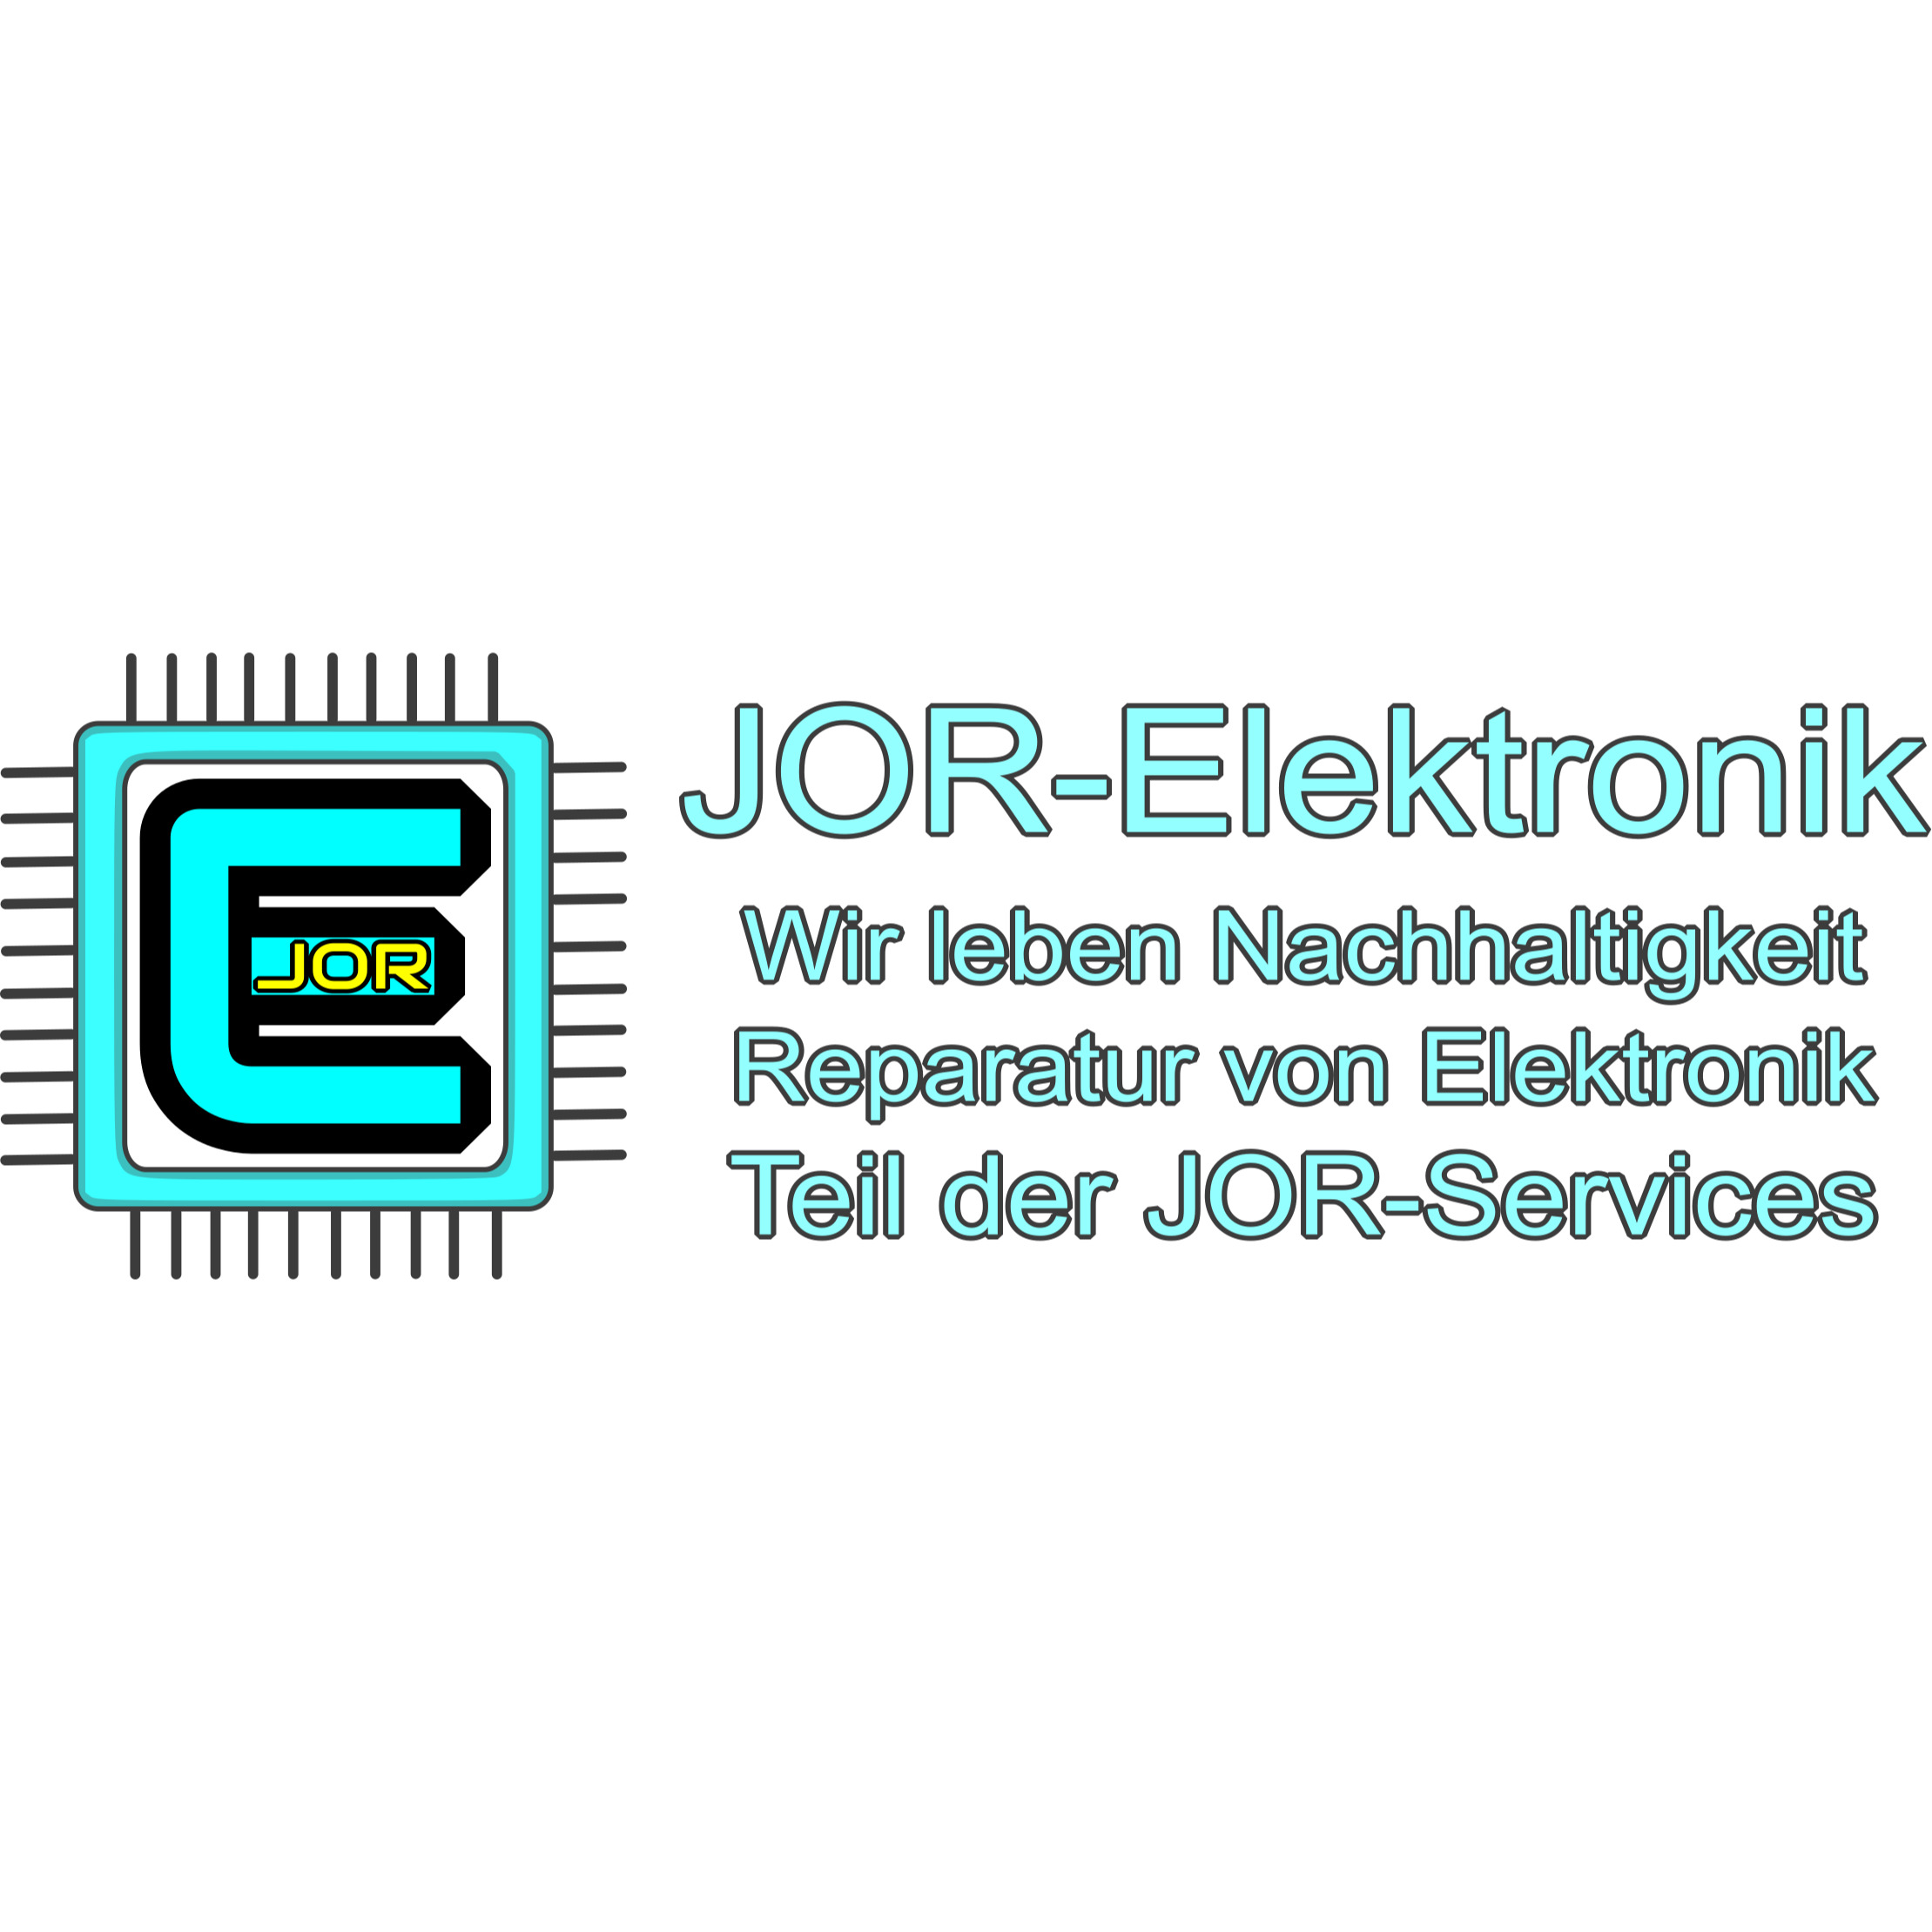 JOR-Elektronik Jens-Oliver-Rittaler Logo